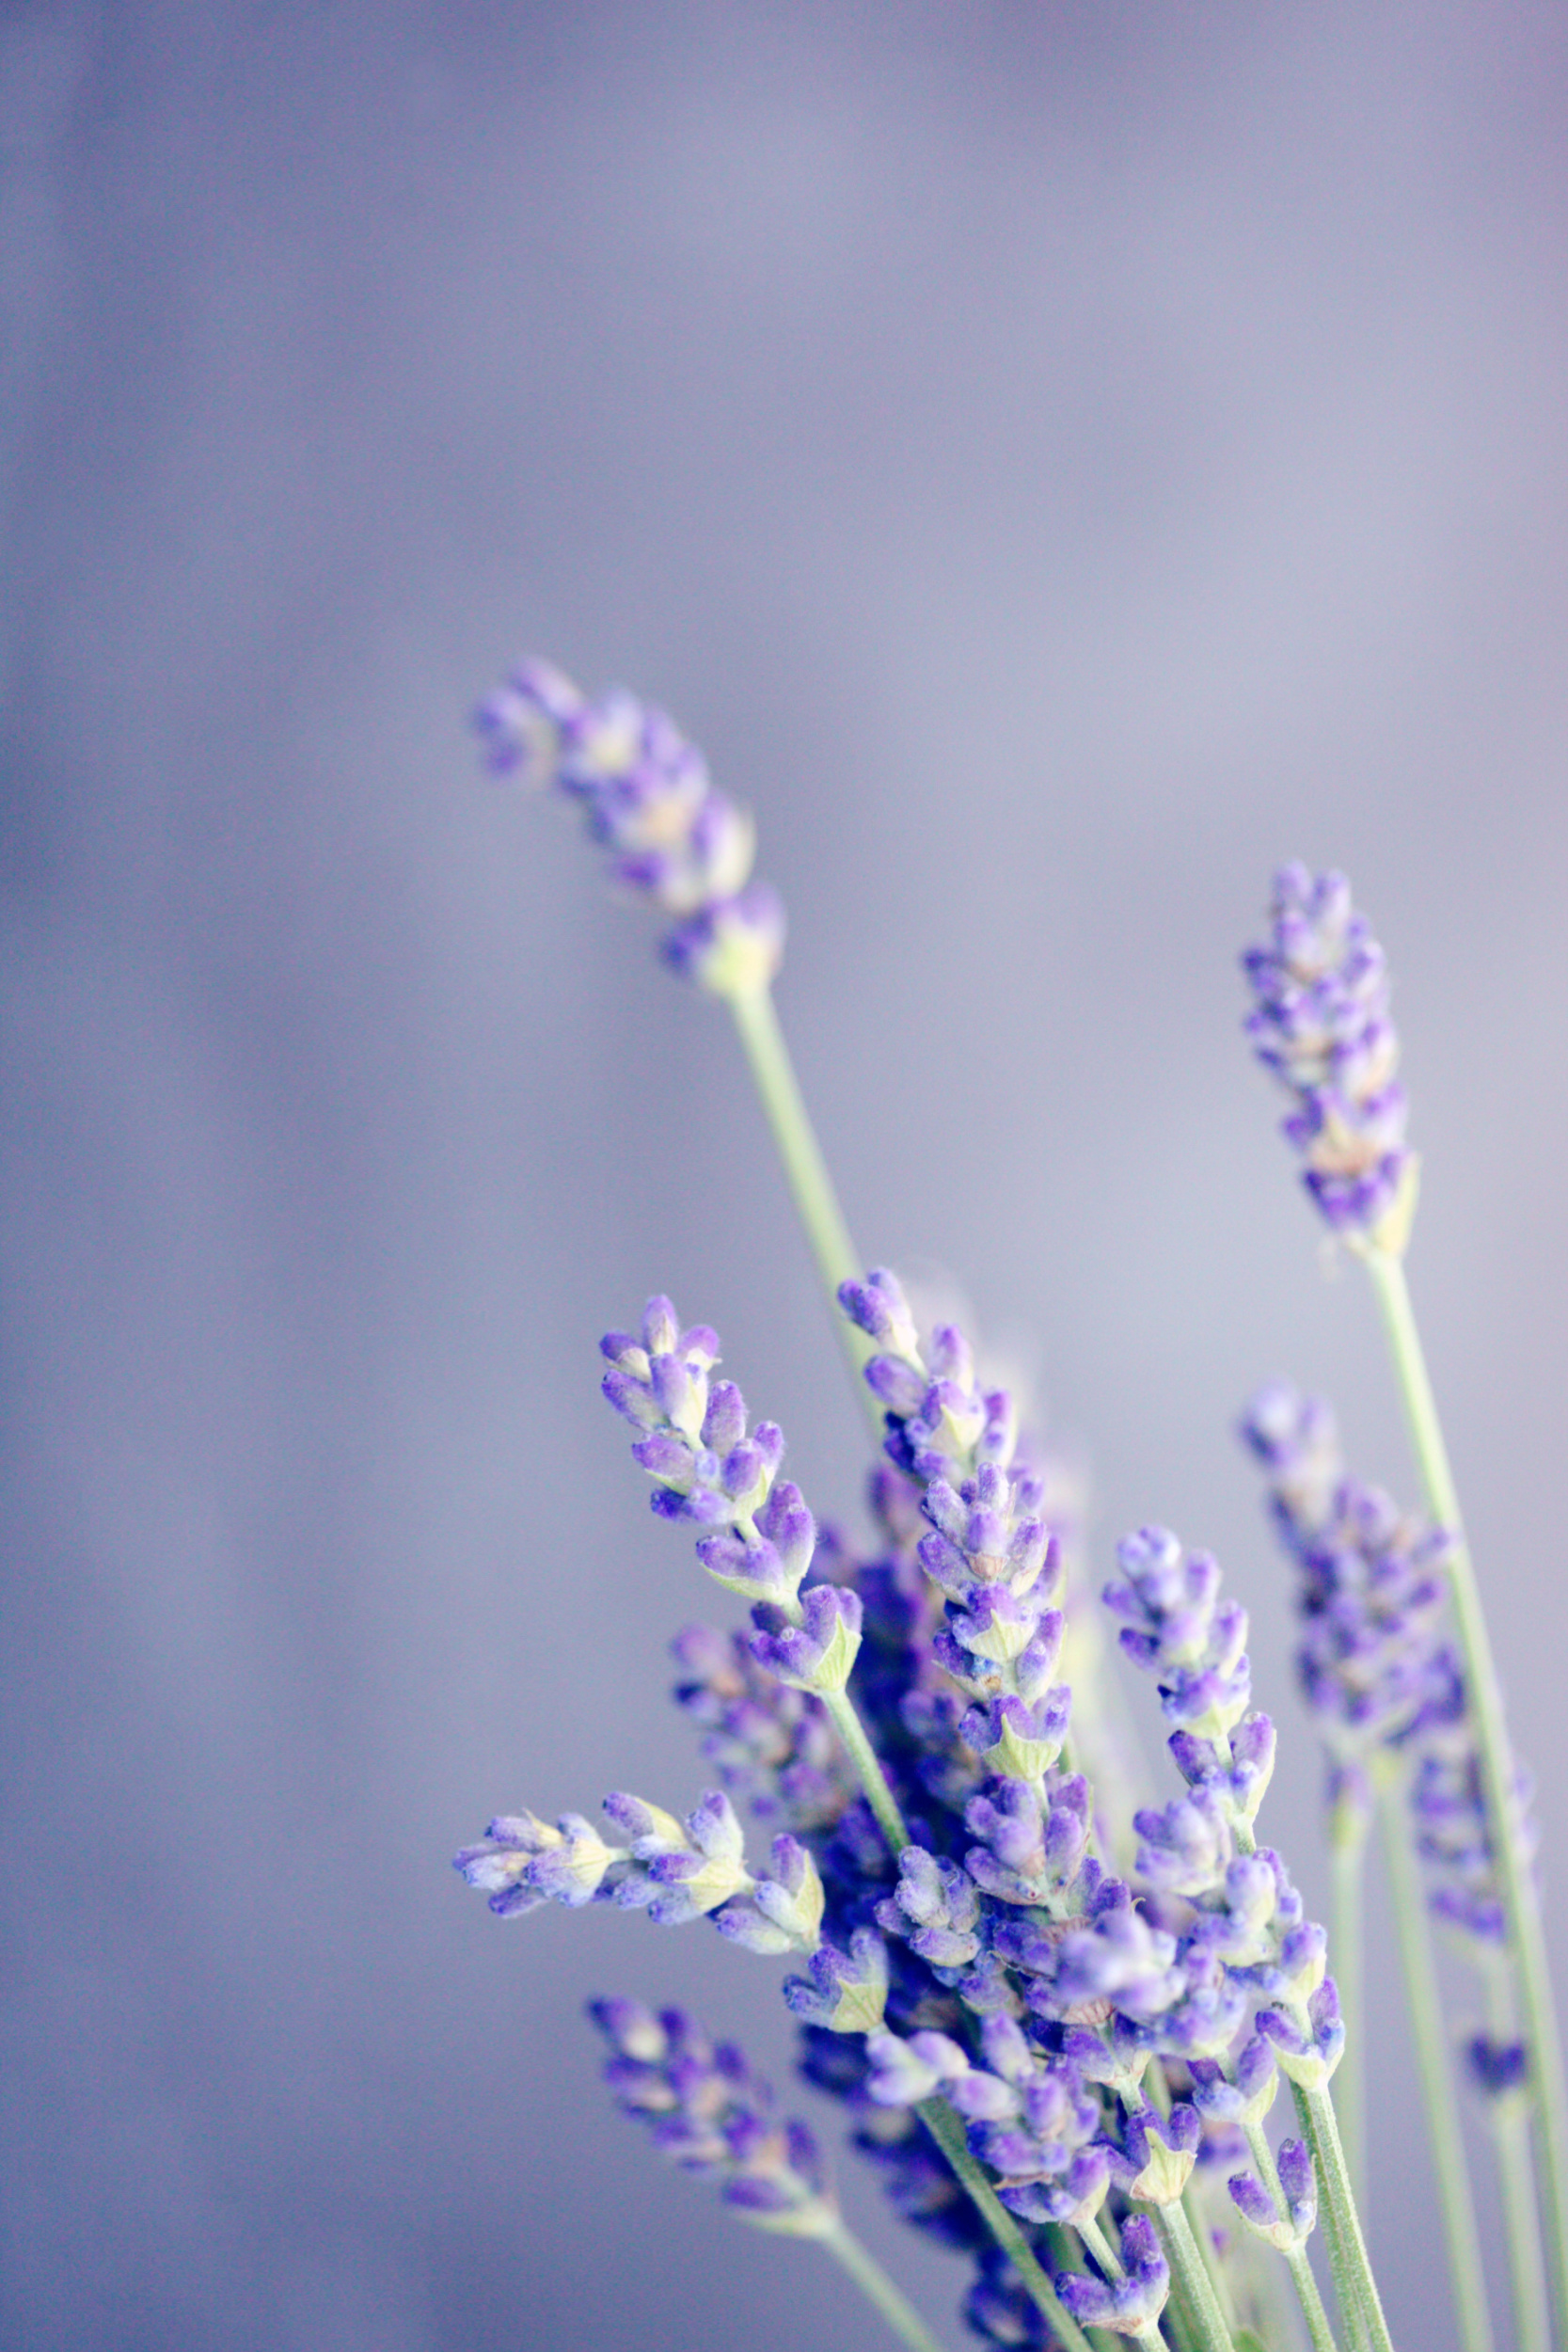 Lavender Essential Oils for better sleep